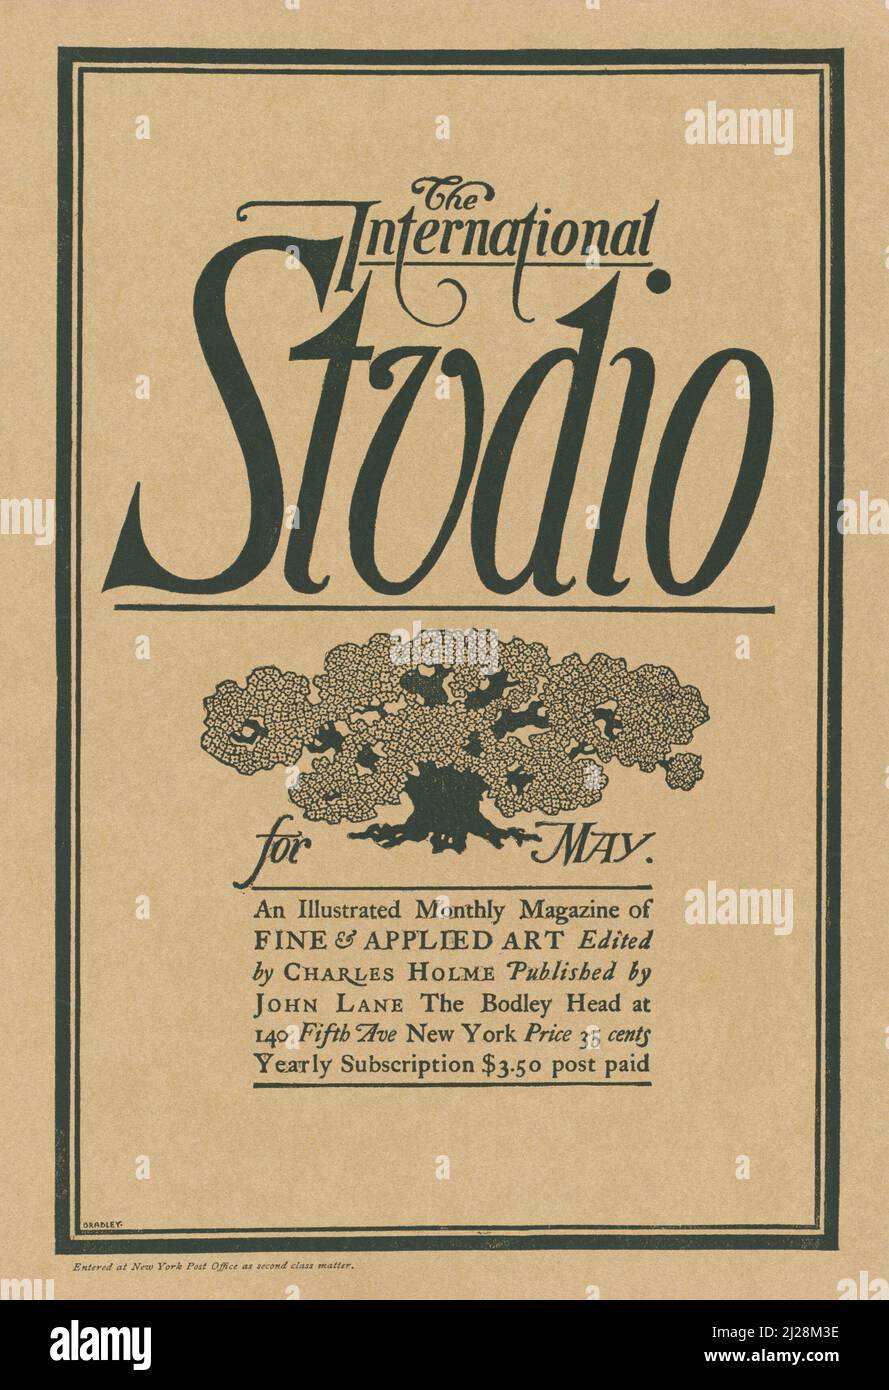 Will Bradley Artwork - das internationale Studio für Mai, 1897. Mai (1897) American Art Nouveau - Old and vintage Poster / Magazine Cover. Stockfoto